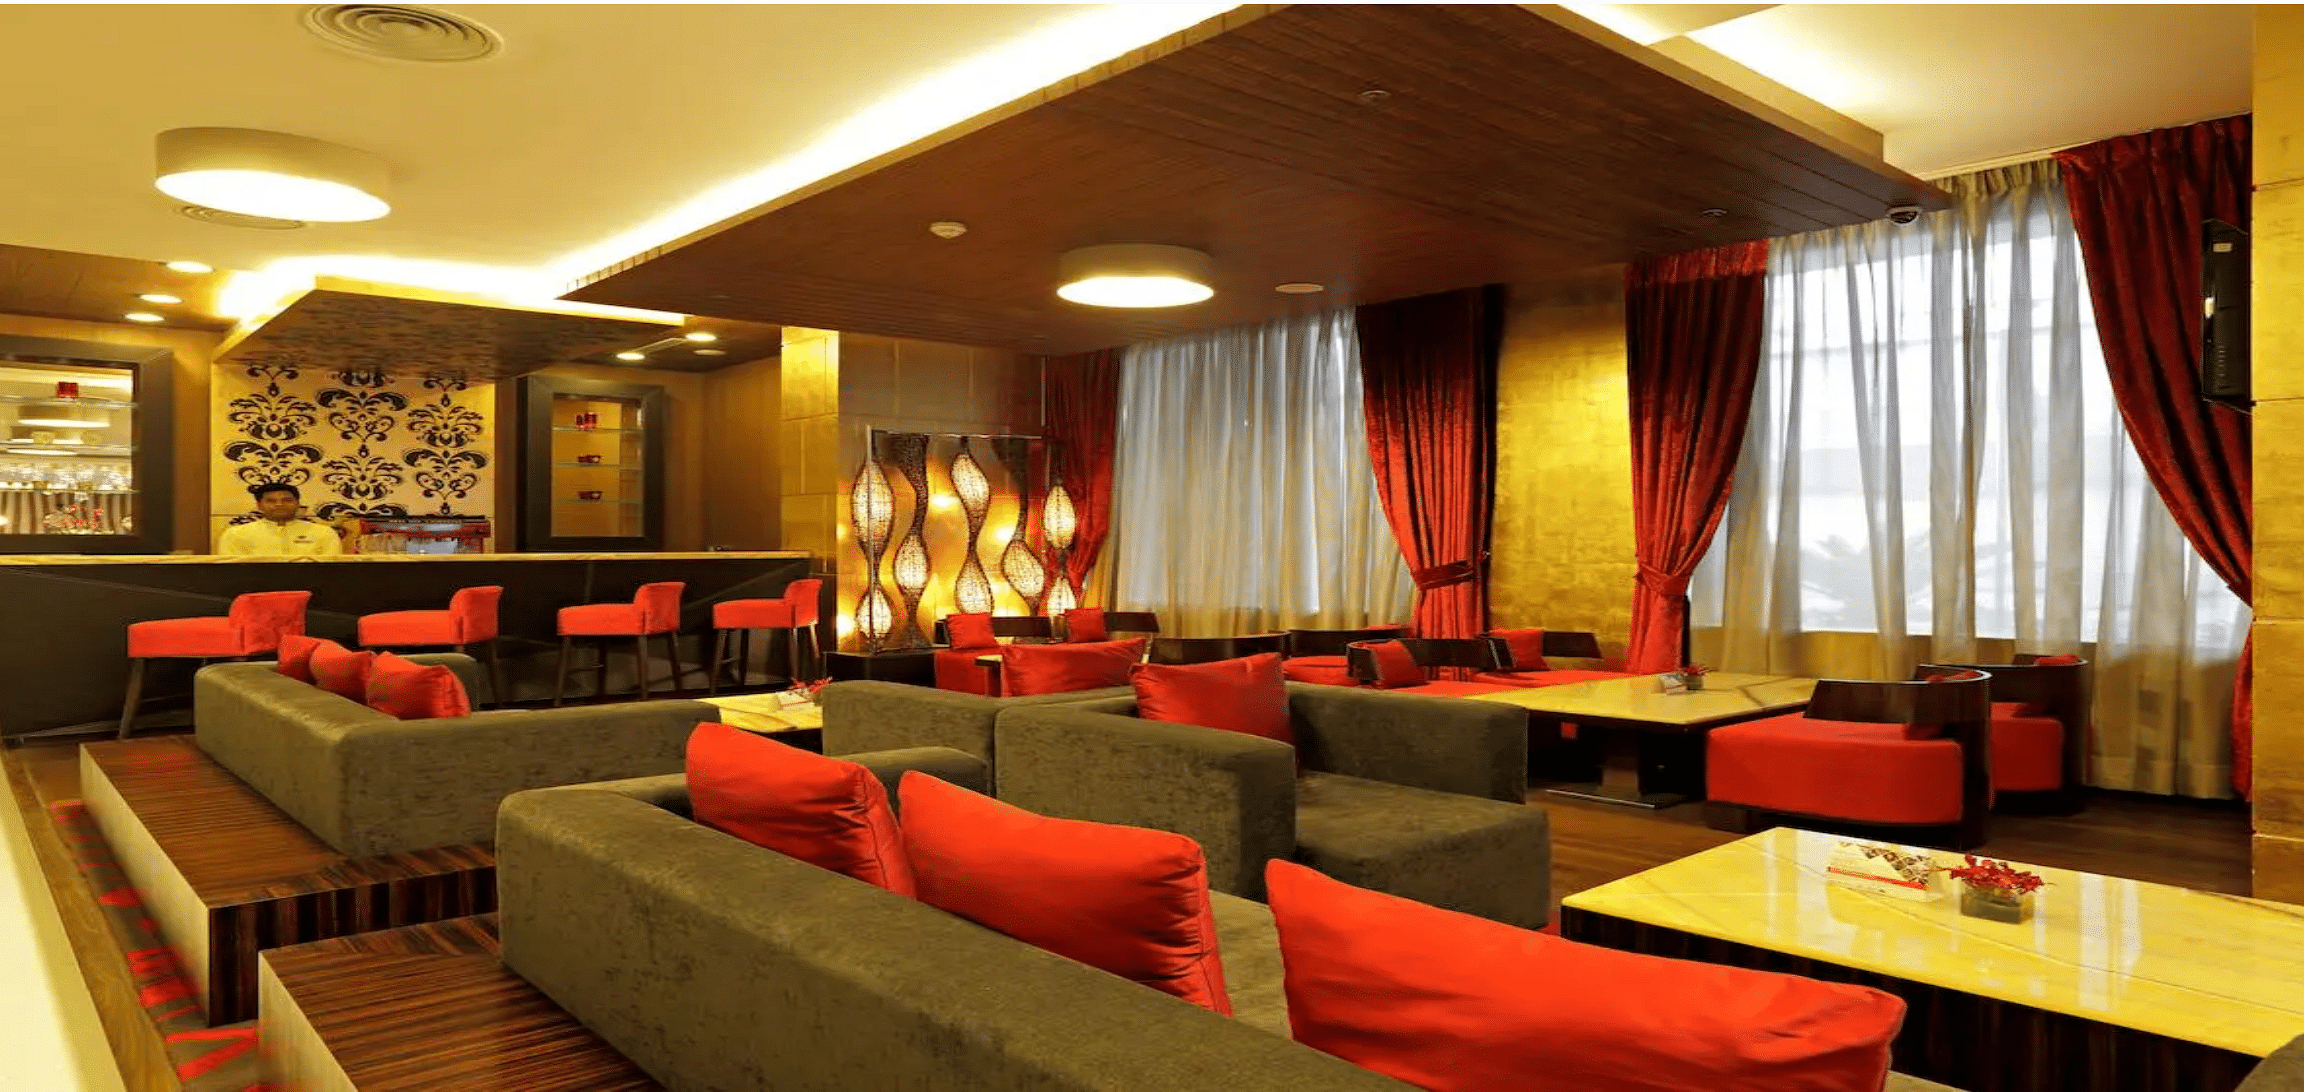 Fairlie Hotels Resorts in Satbari, Delhi